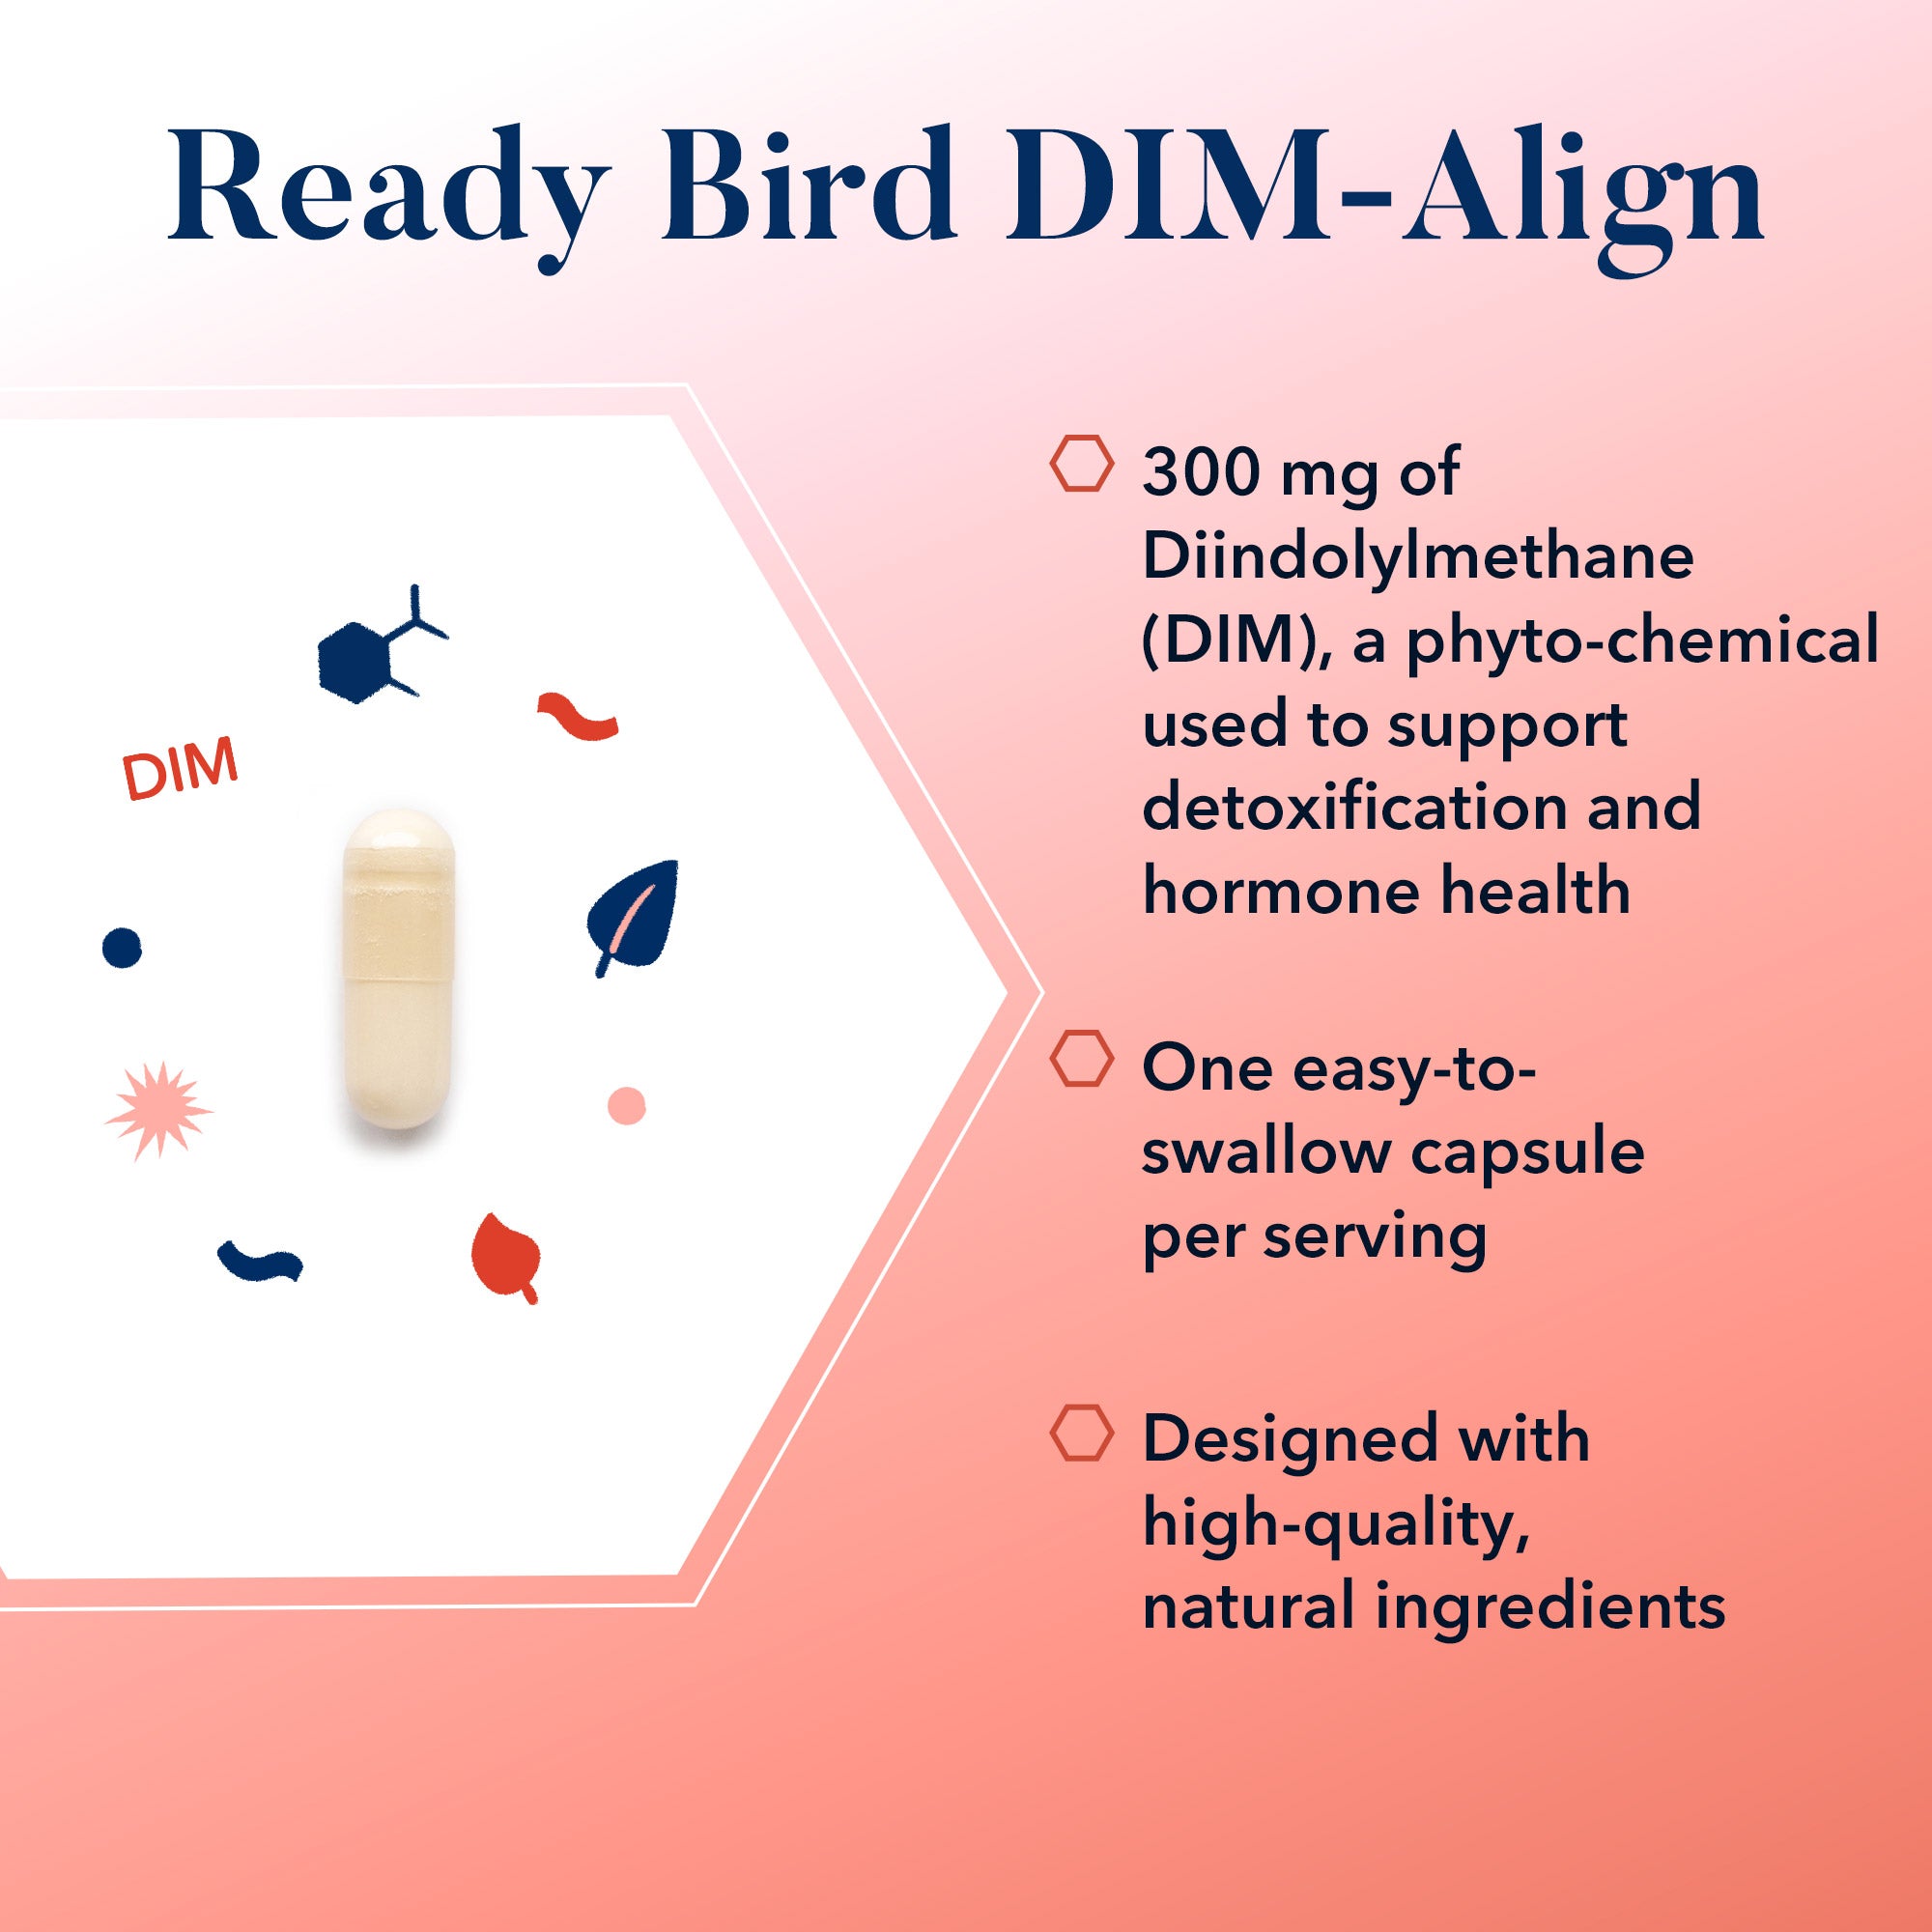 Ready Bird DIM-Align